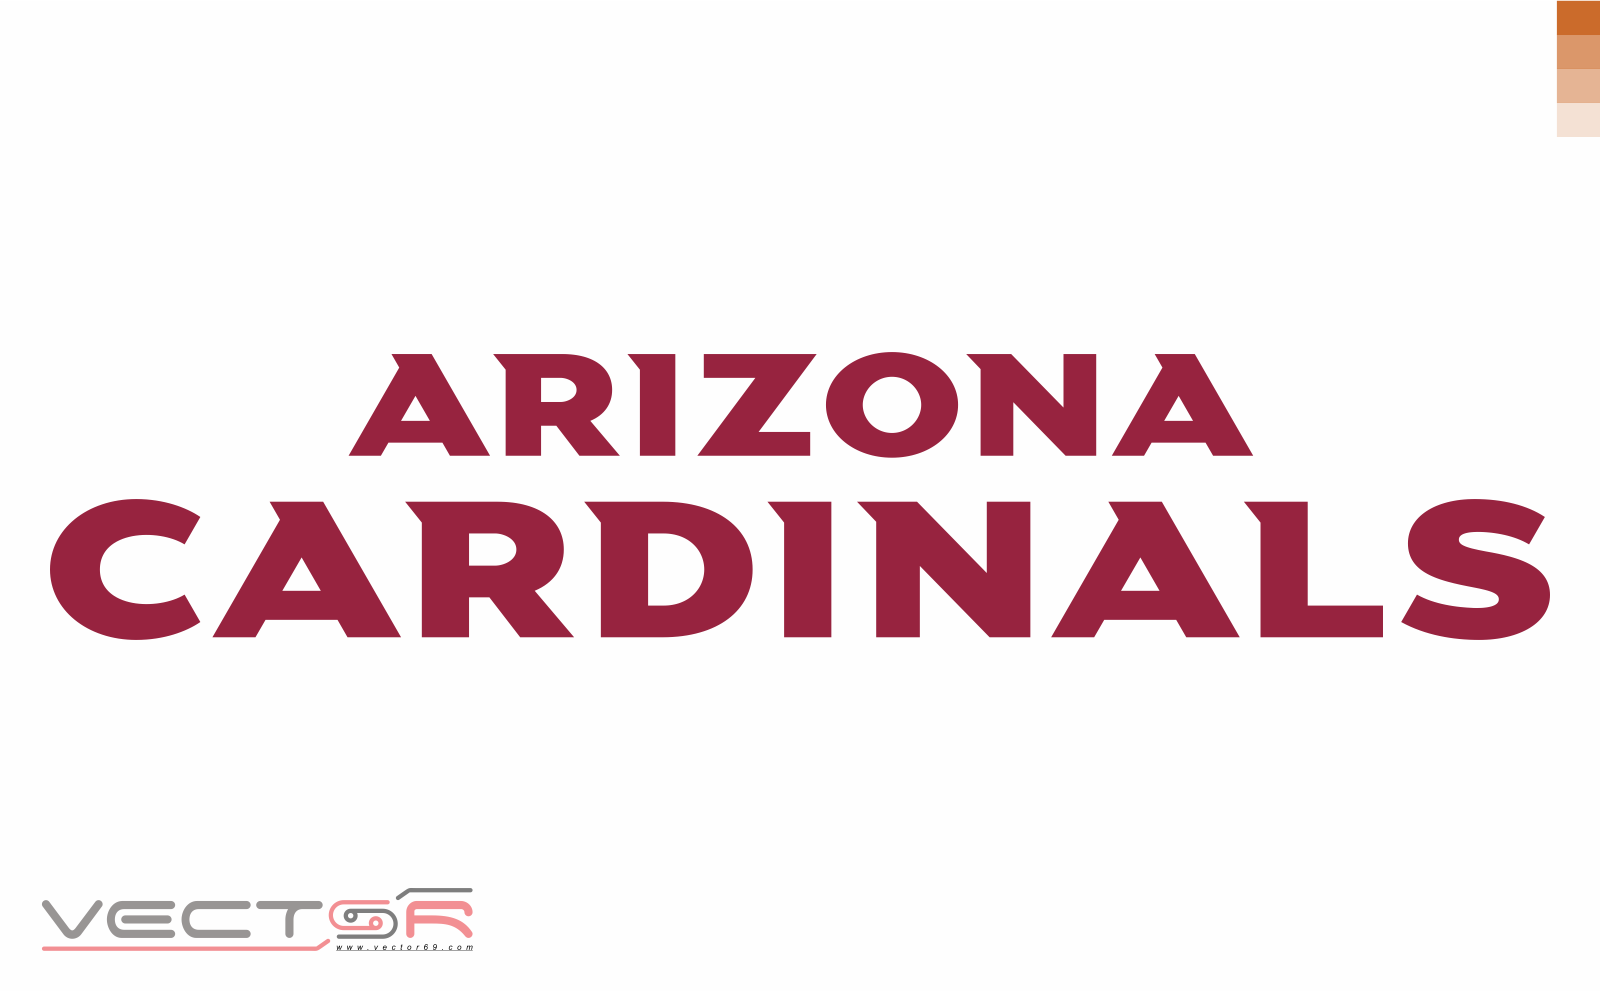 Arizona Cardinals Wordmark - Download Vector File AI (Adobe Illustrator)